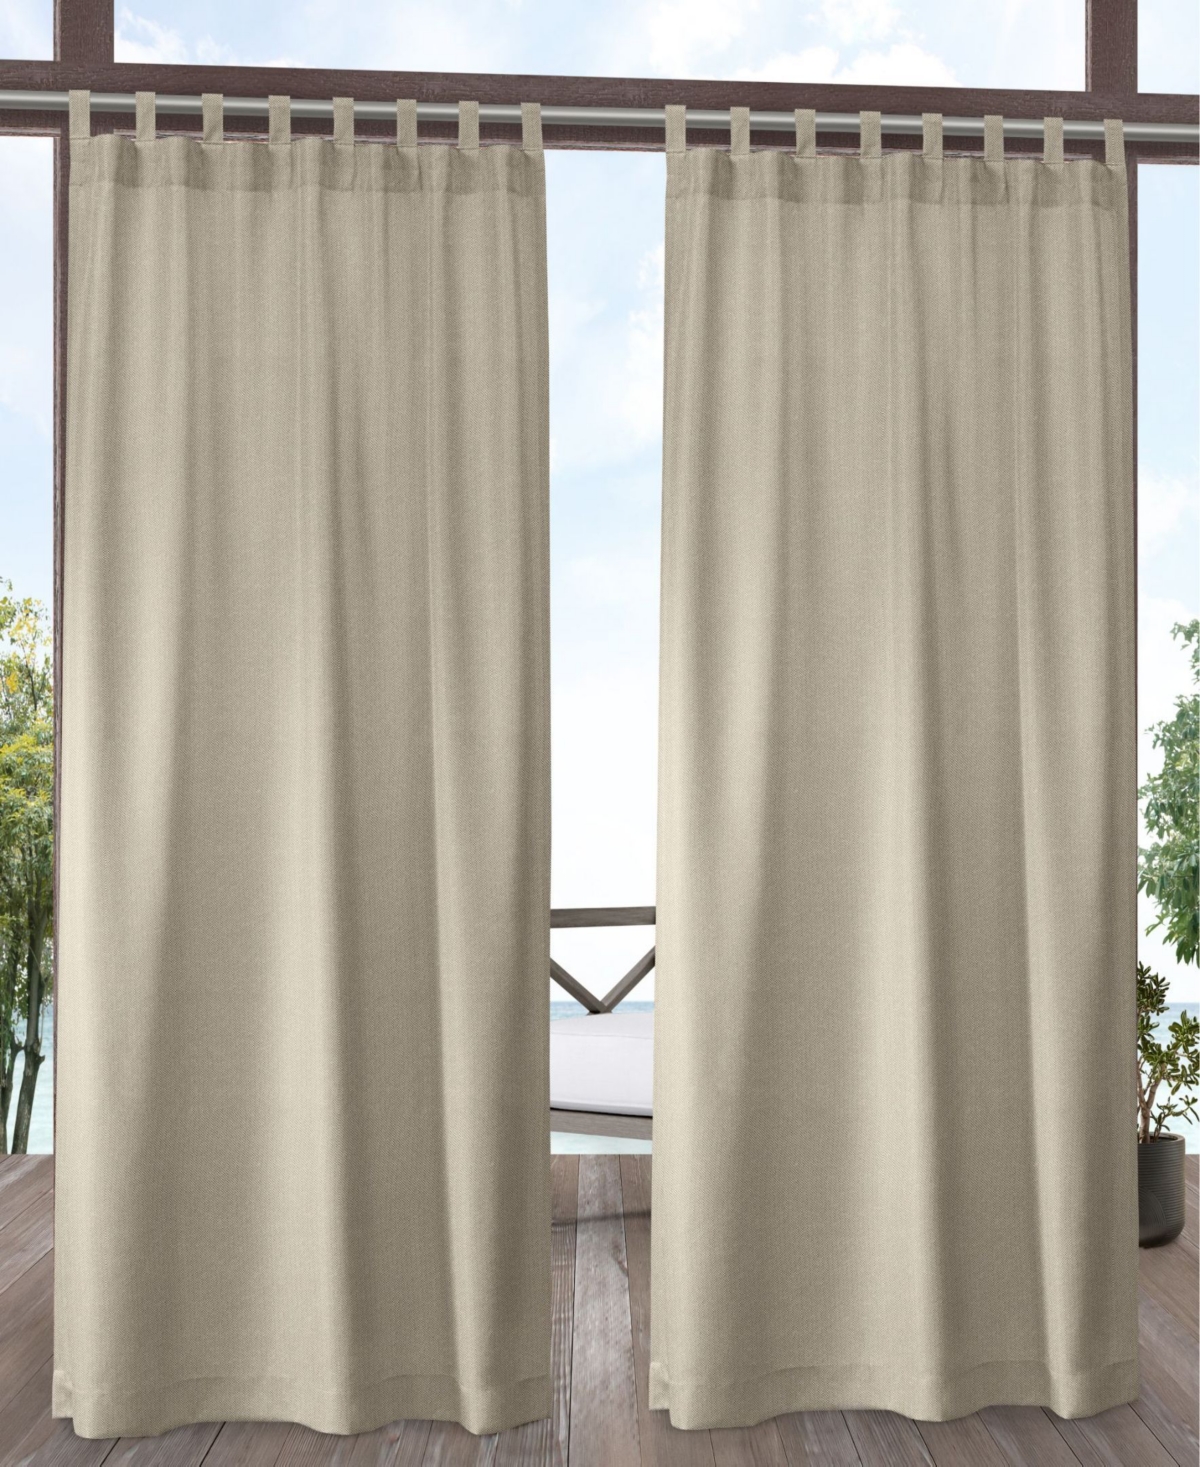 Curtains Biscayne Indoor - Outdoor Two Tone Textured Grommet Top Curtain Panel Pair, 54" x 108" - Beige